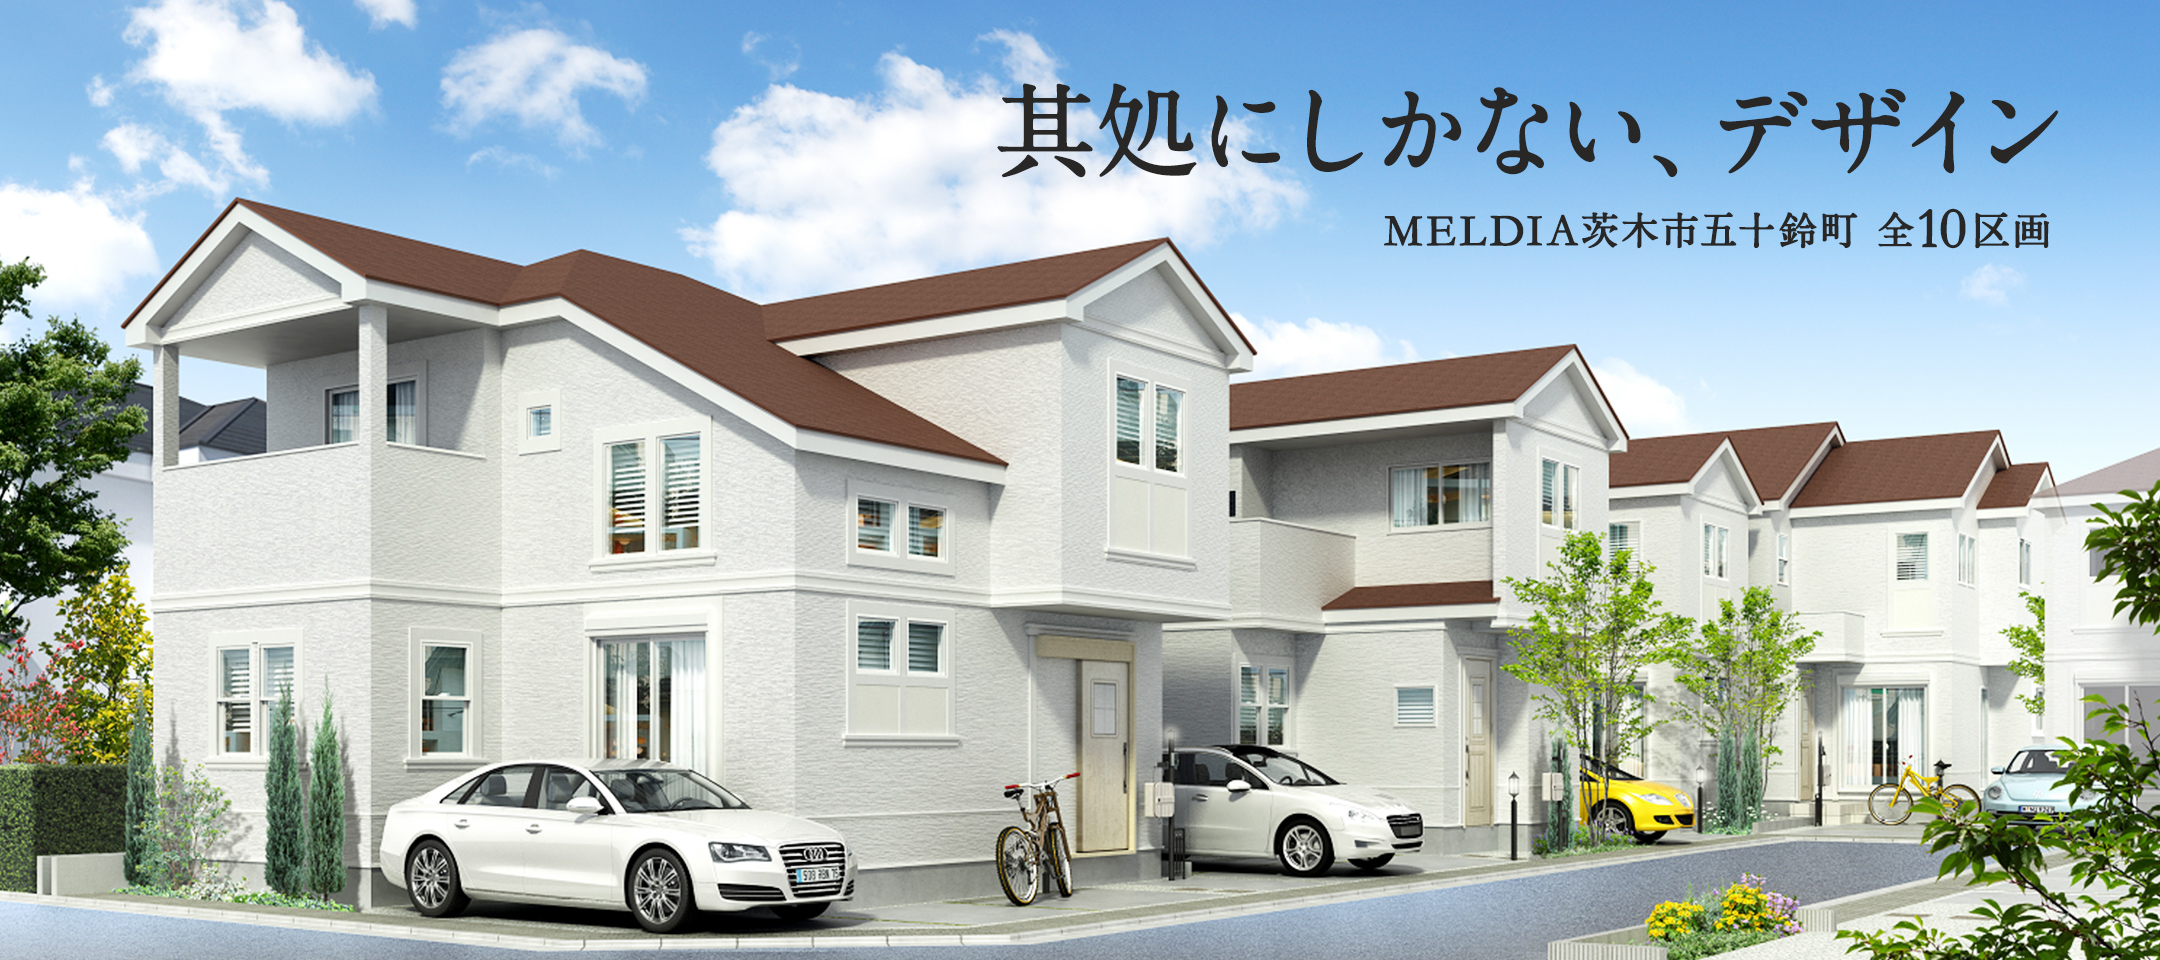 MELDIA茨木市五十鈴町、全18邸の新しい街で自由な子育てを楽しもう